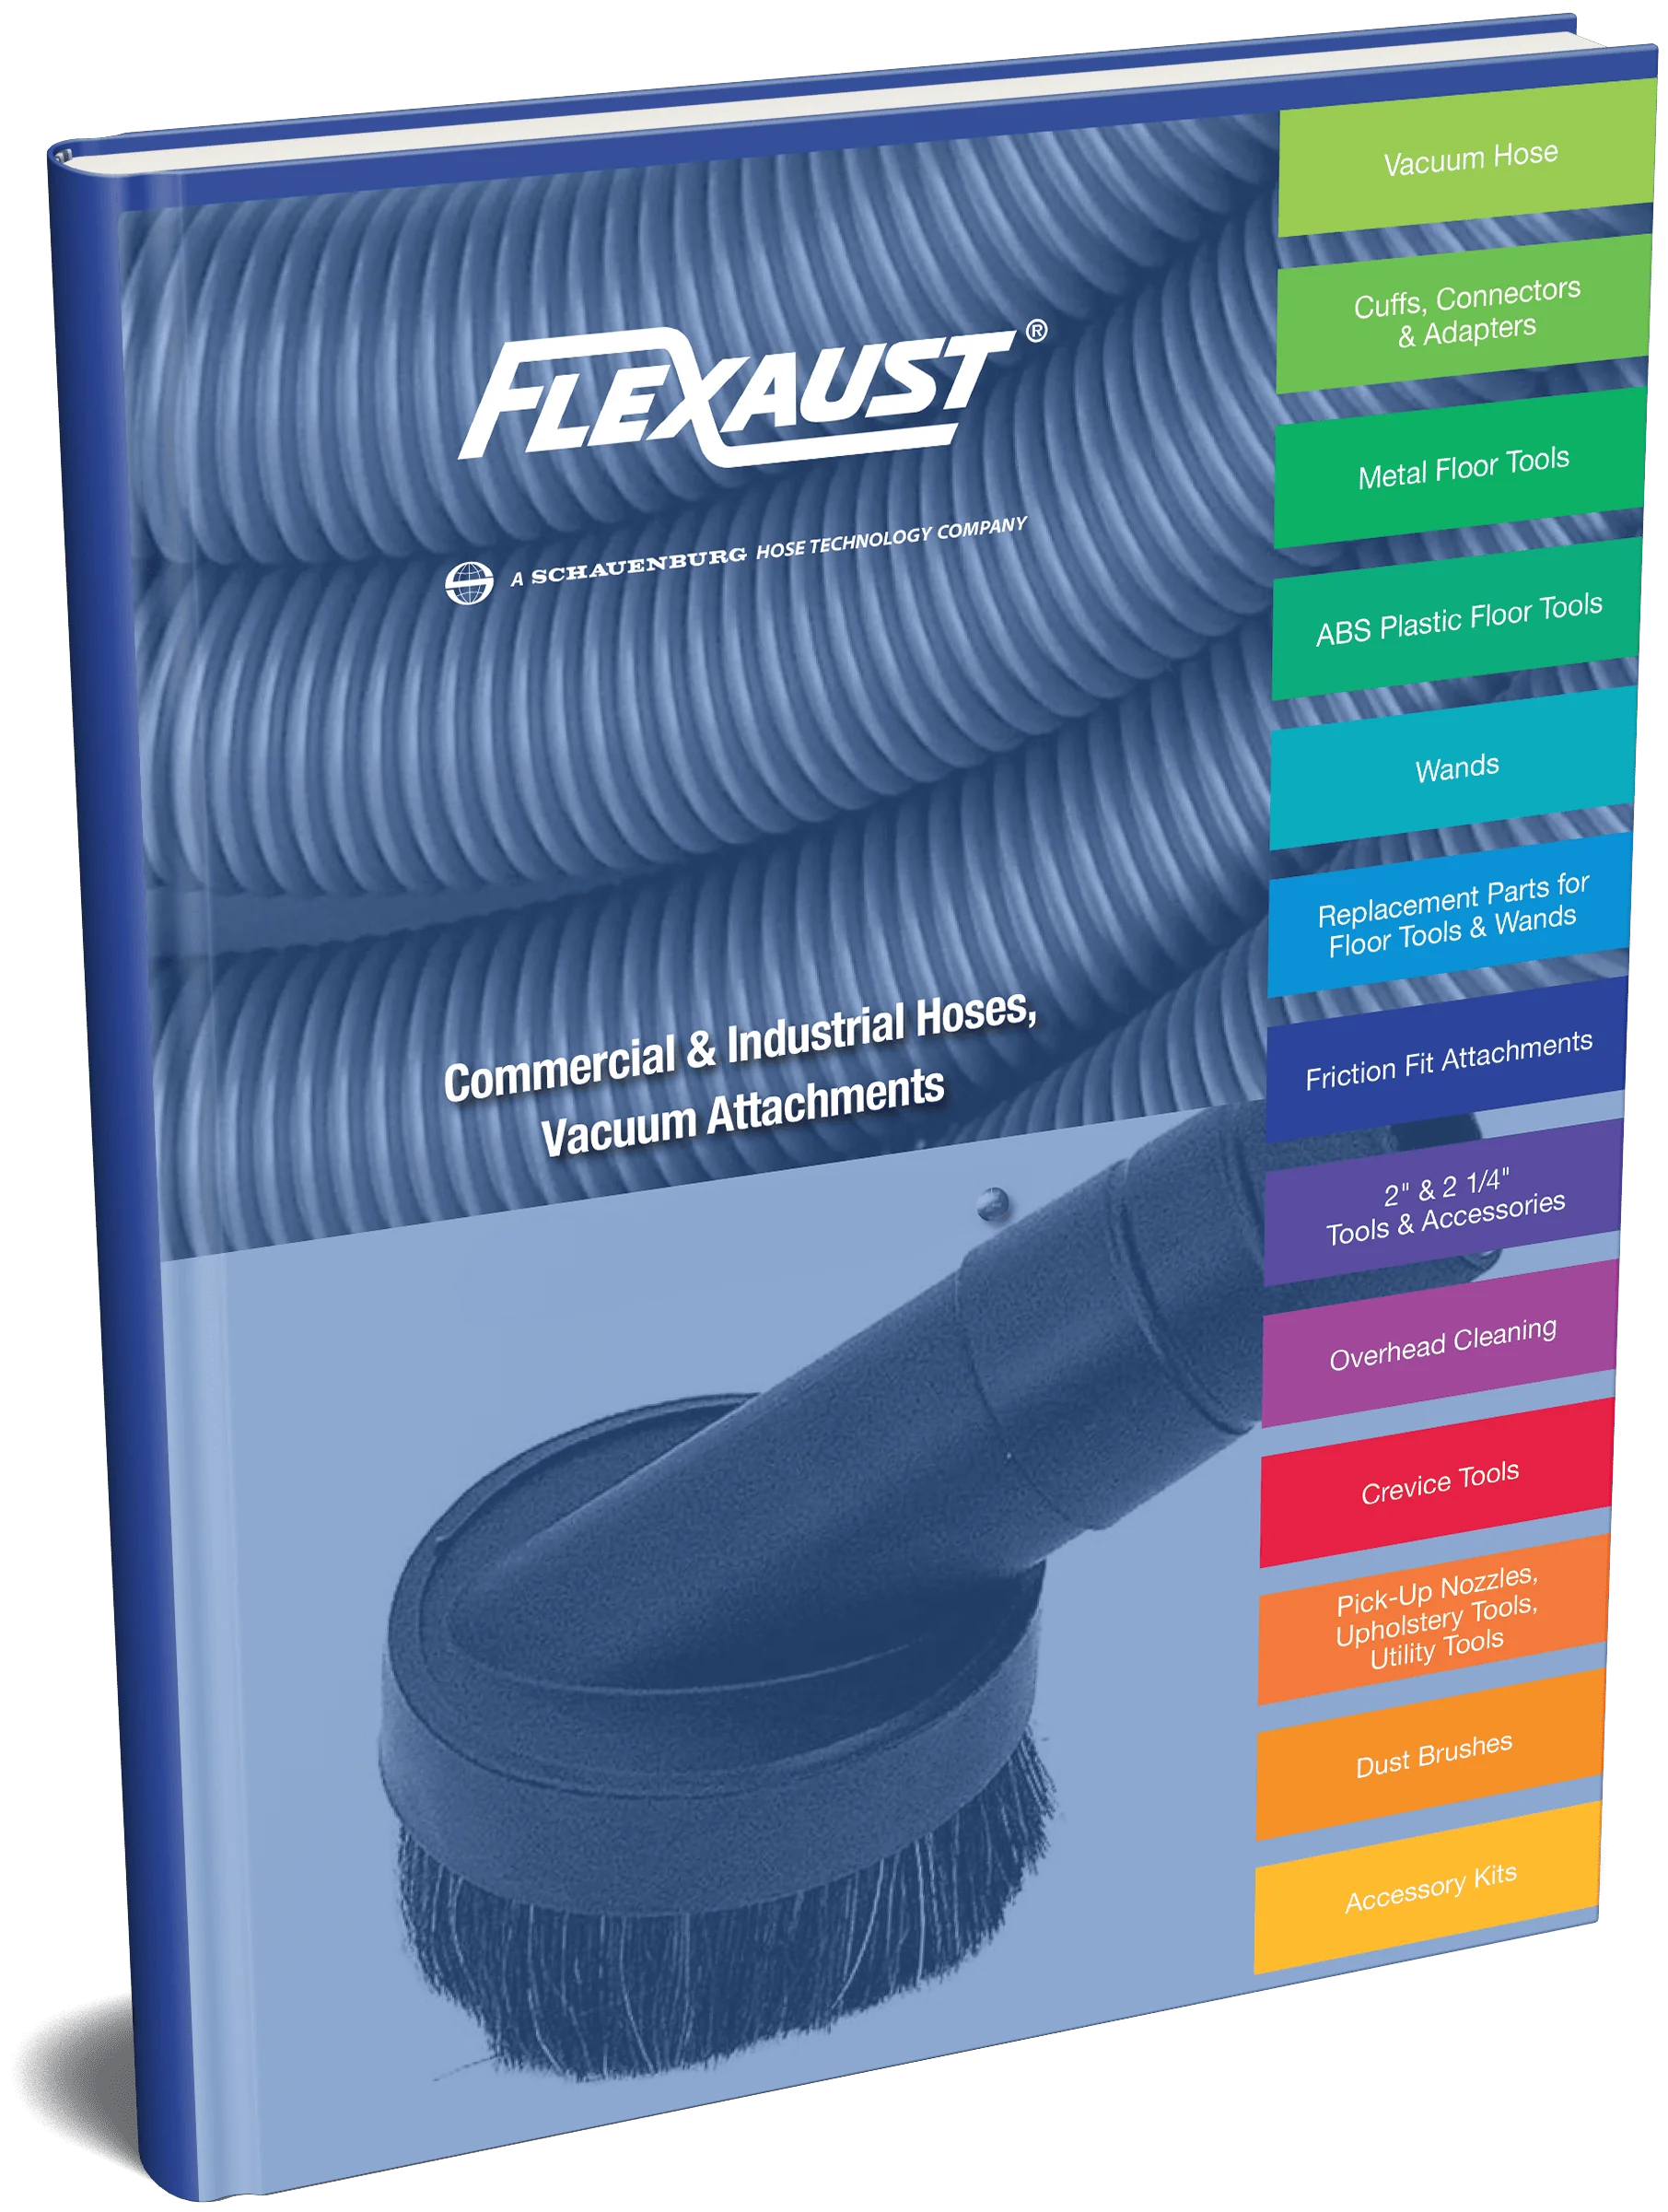 Flexaust Commercial & Industrial, Vacuum attachments